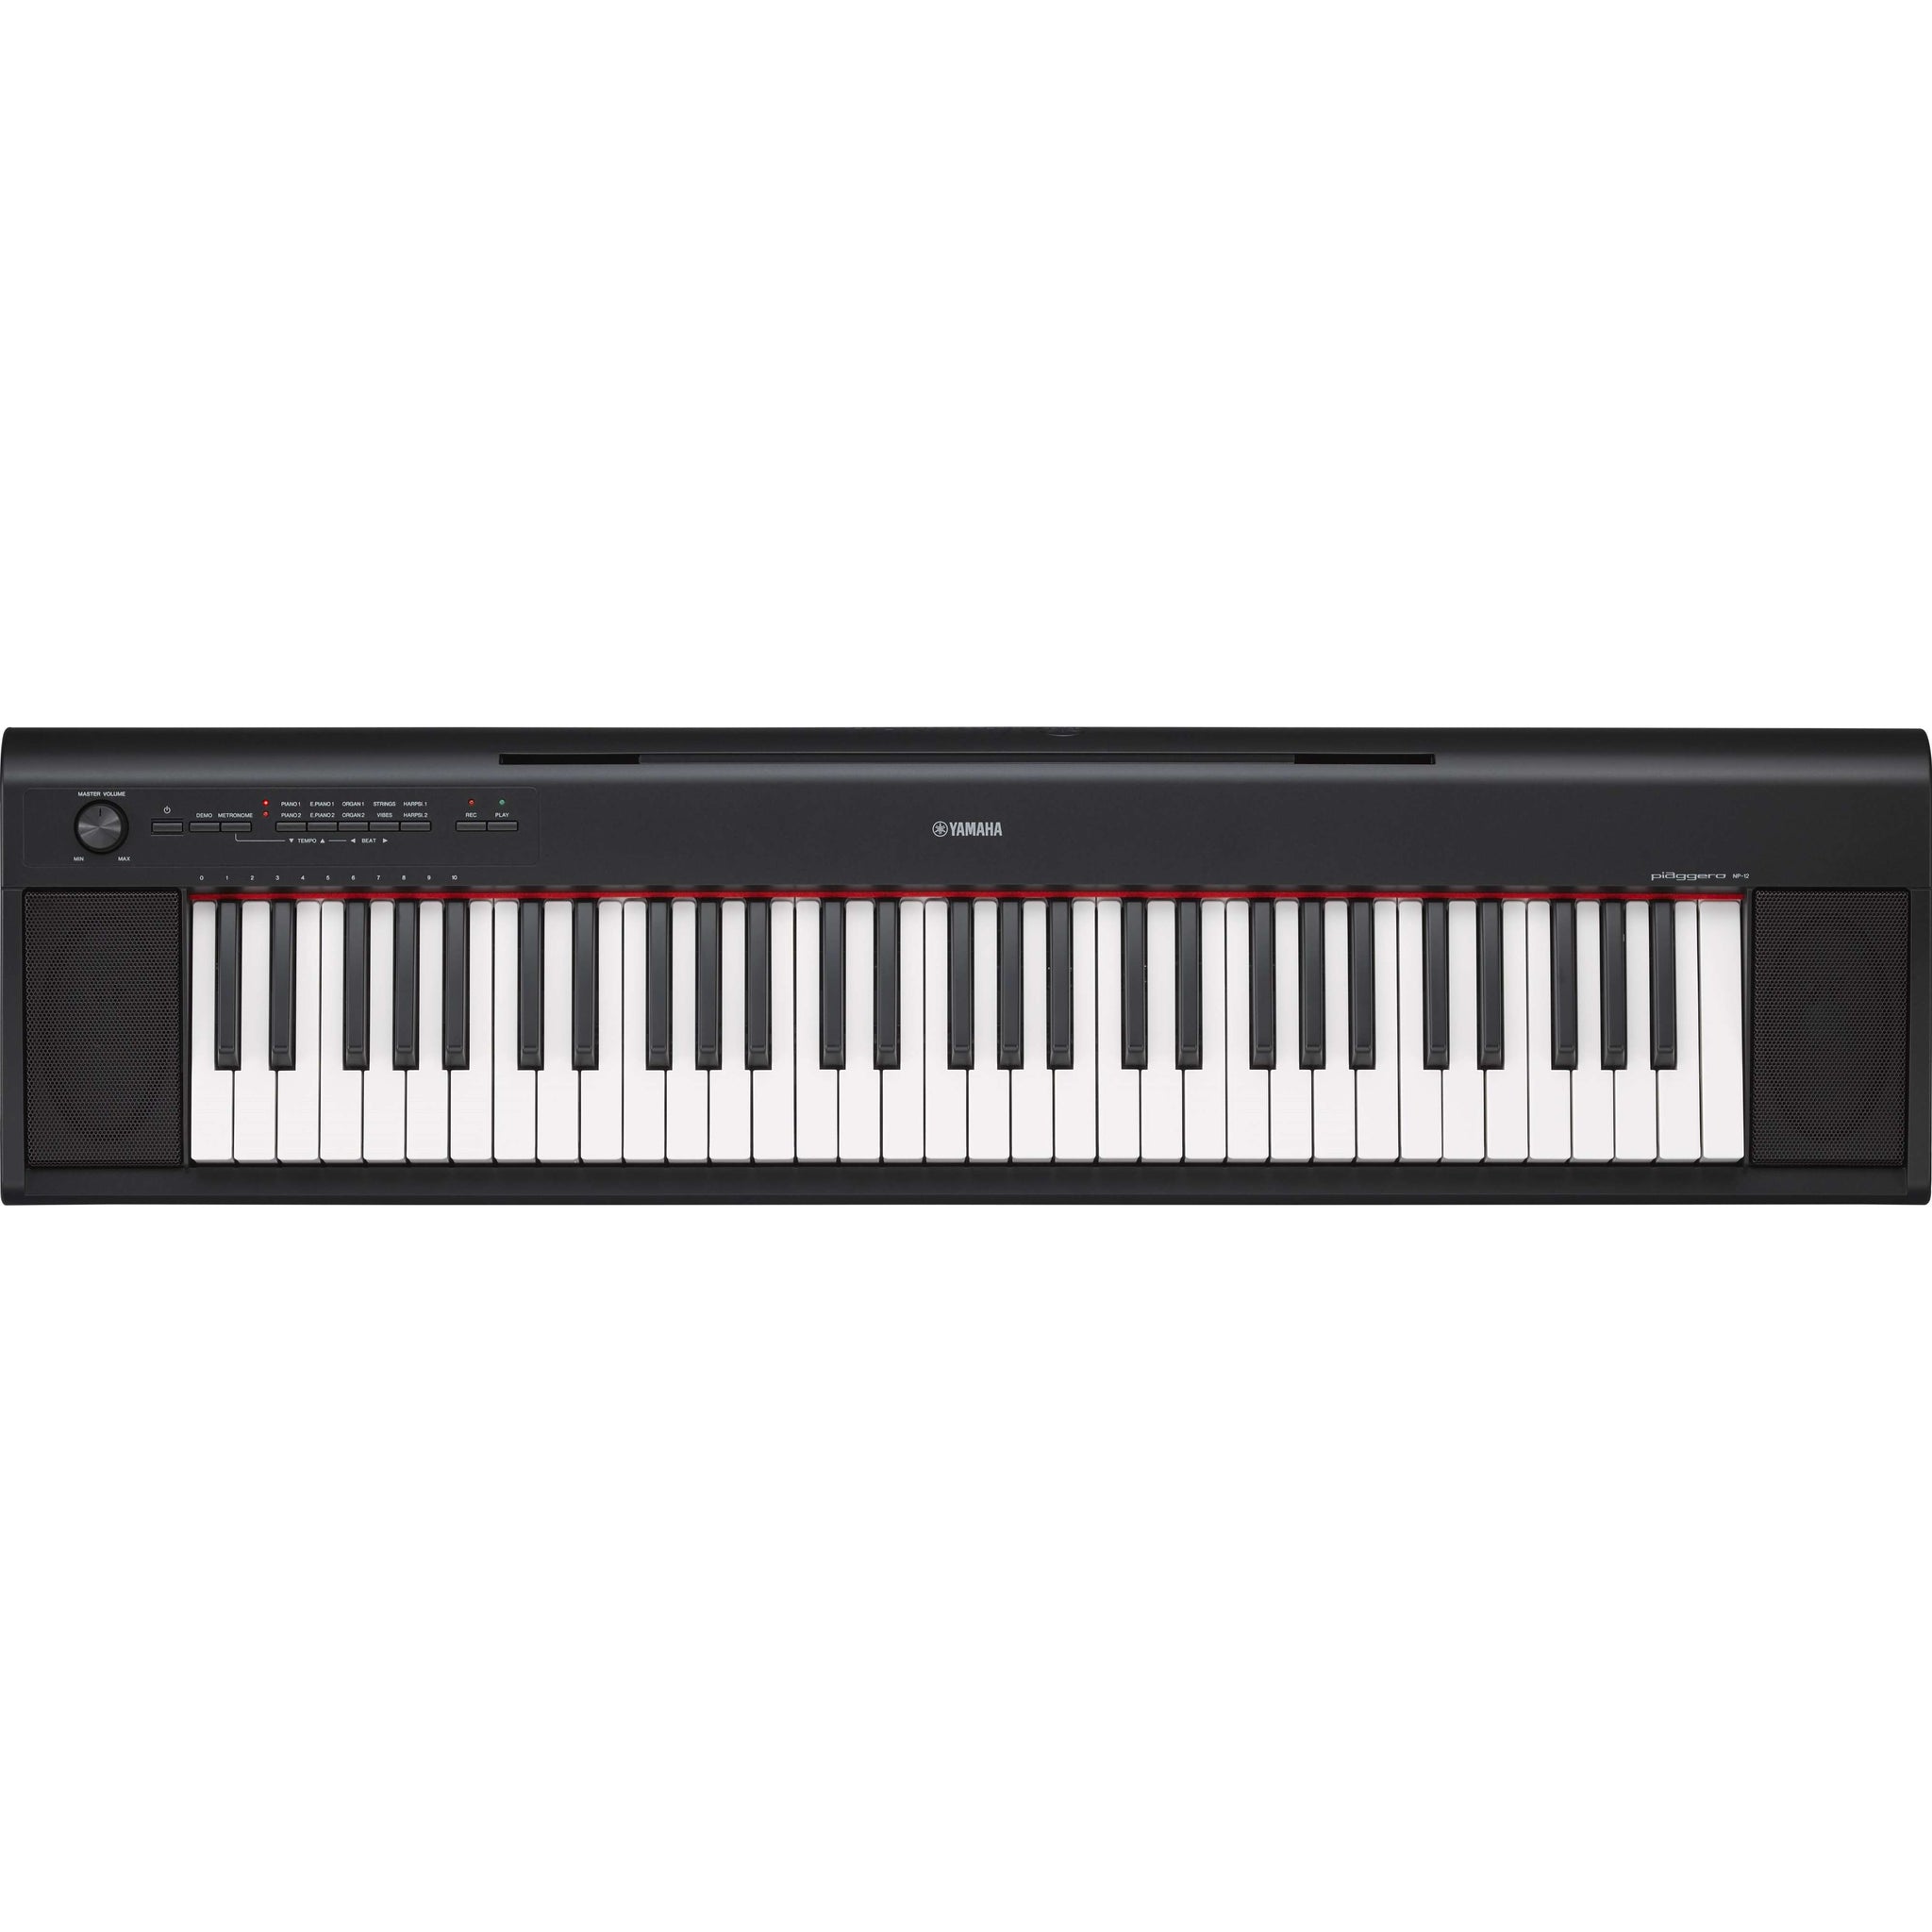 Yamaha PSRE373 Electronic Keyboard - Black for sale online